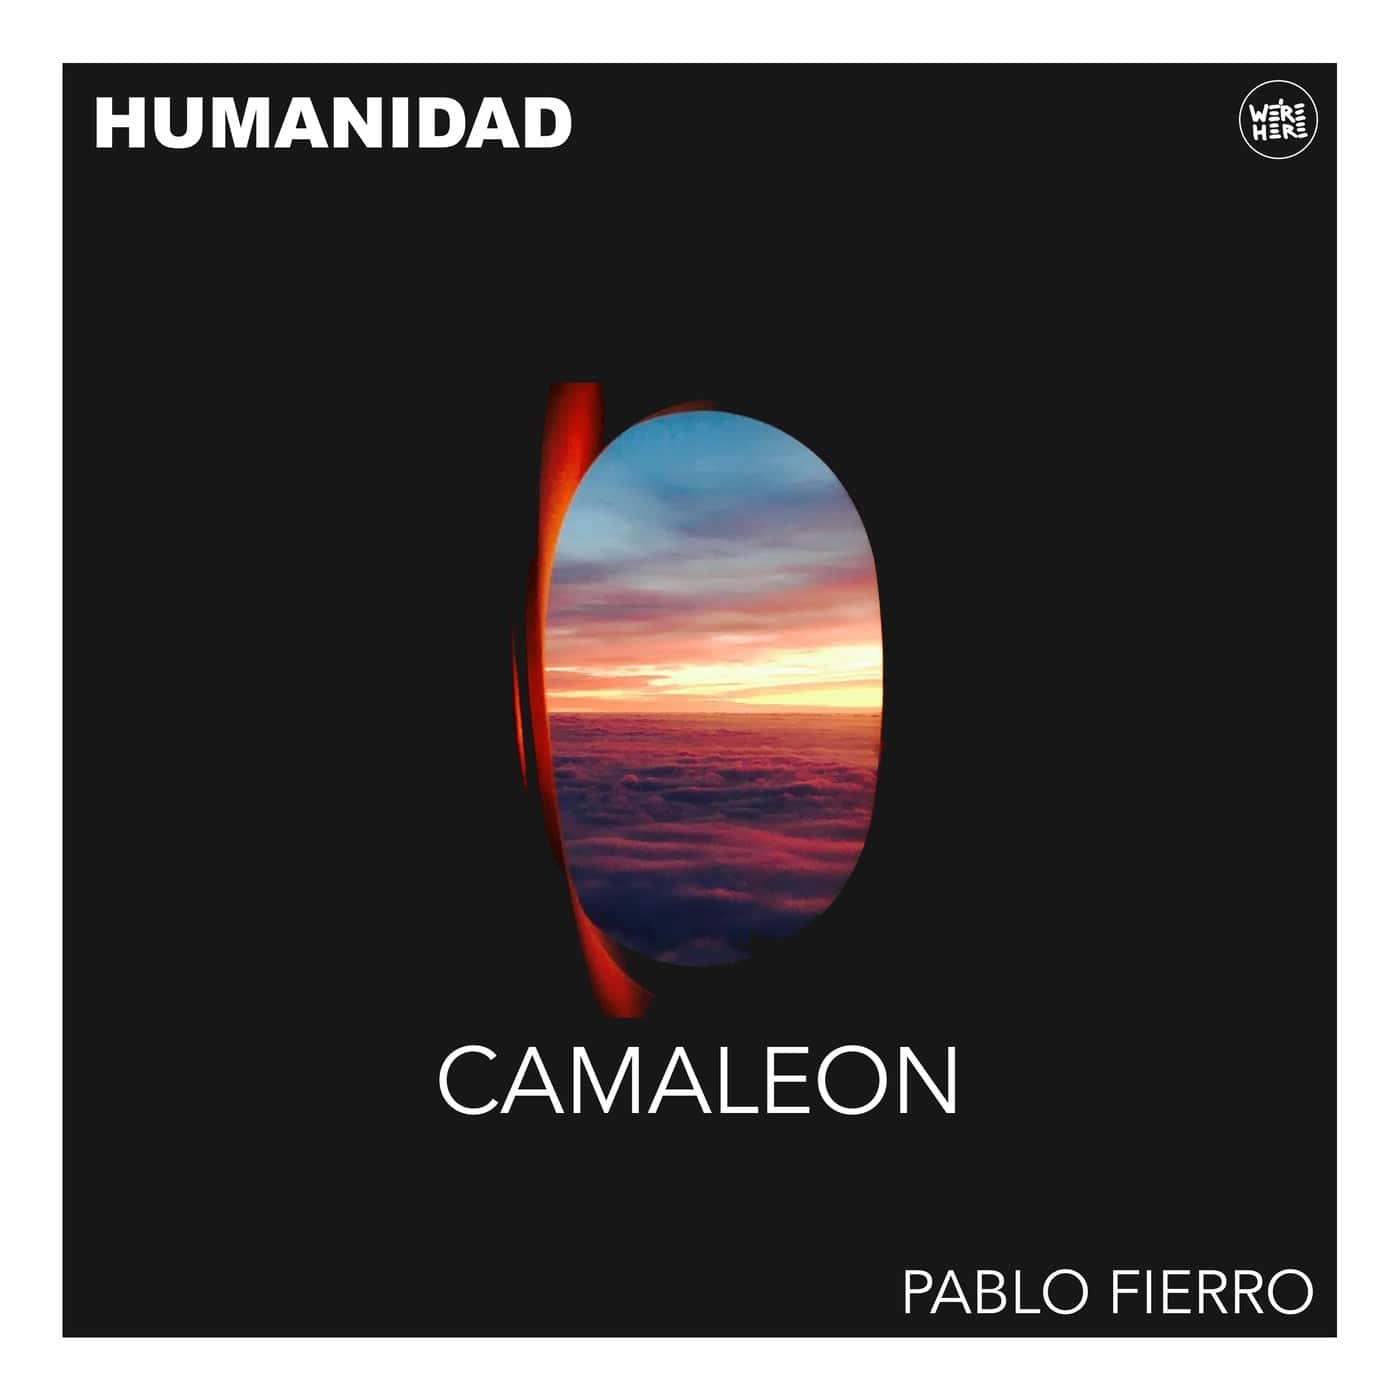 image cover: Pablo Fierro - Camaleon / WAH007S2